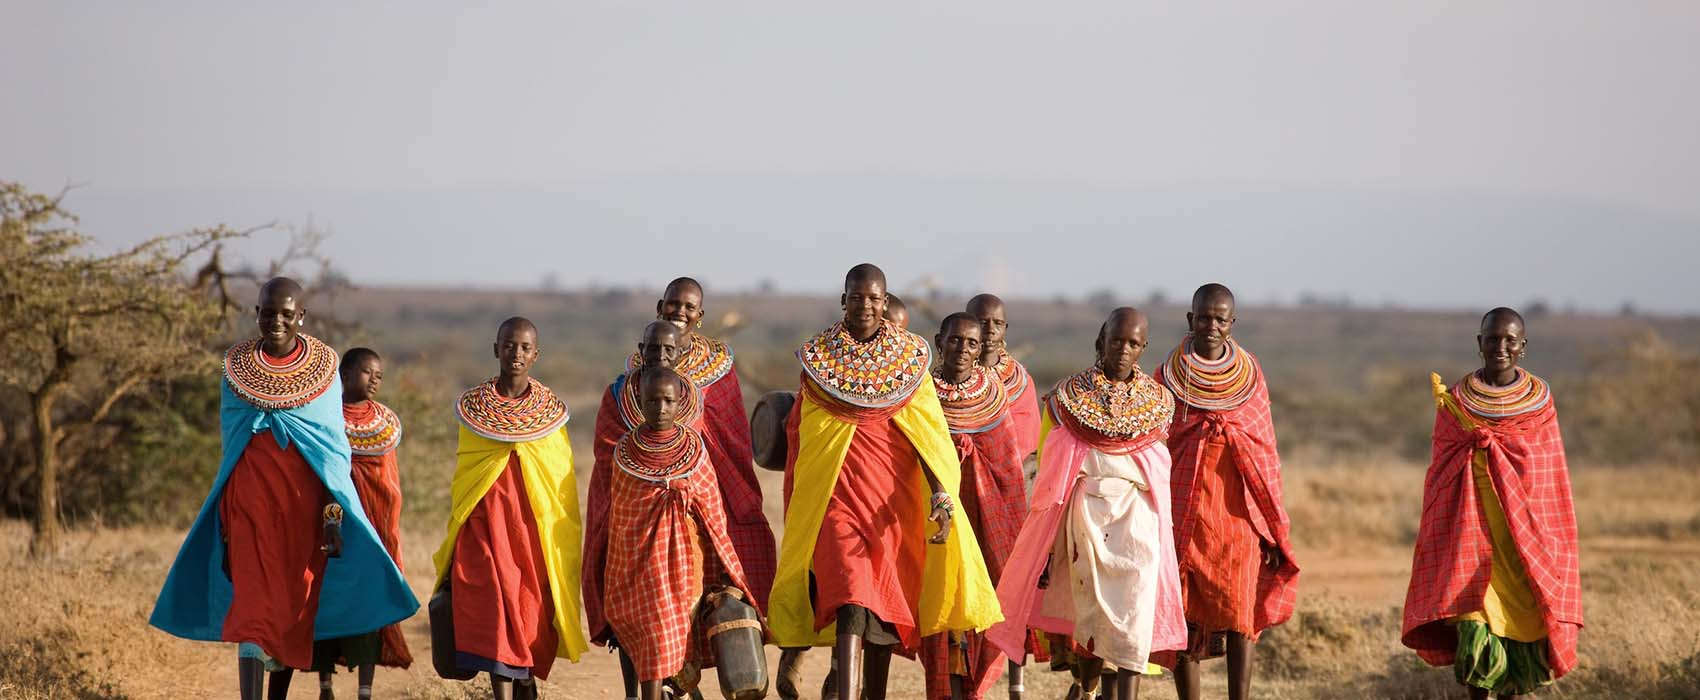 African Laikipia Plateau Safari tribe